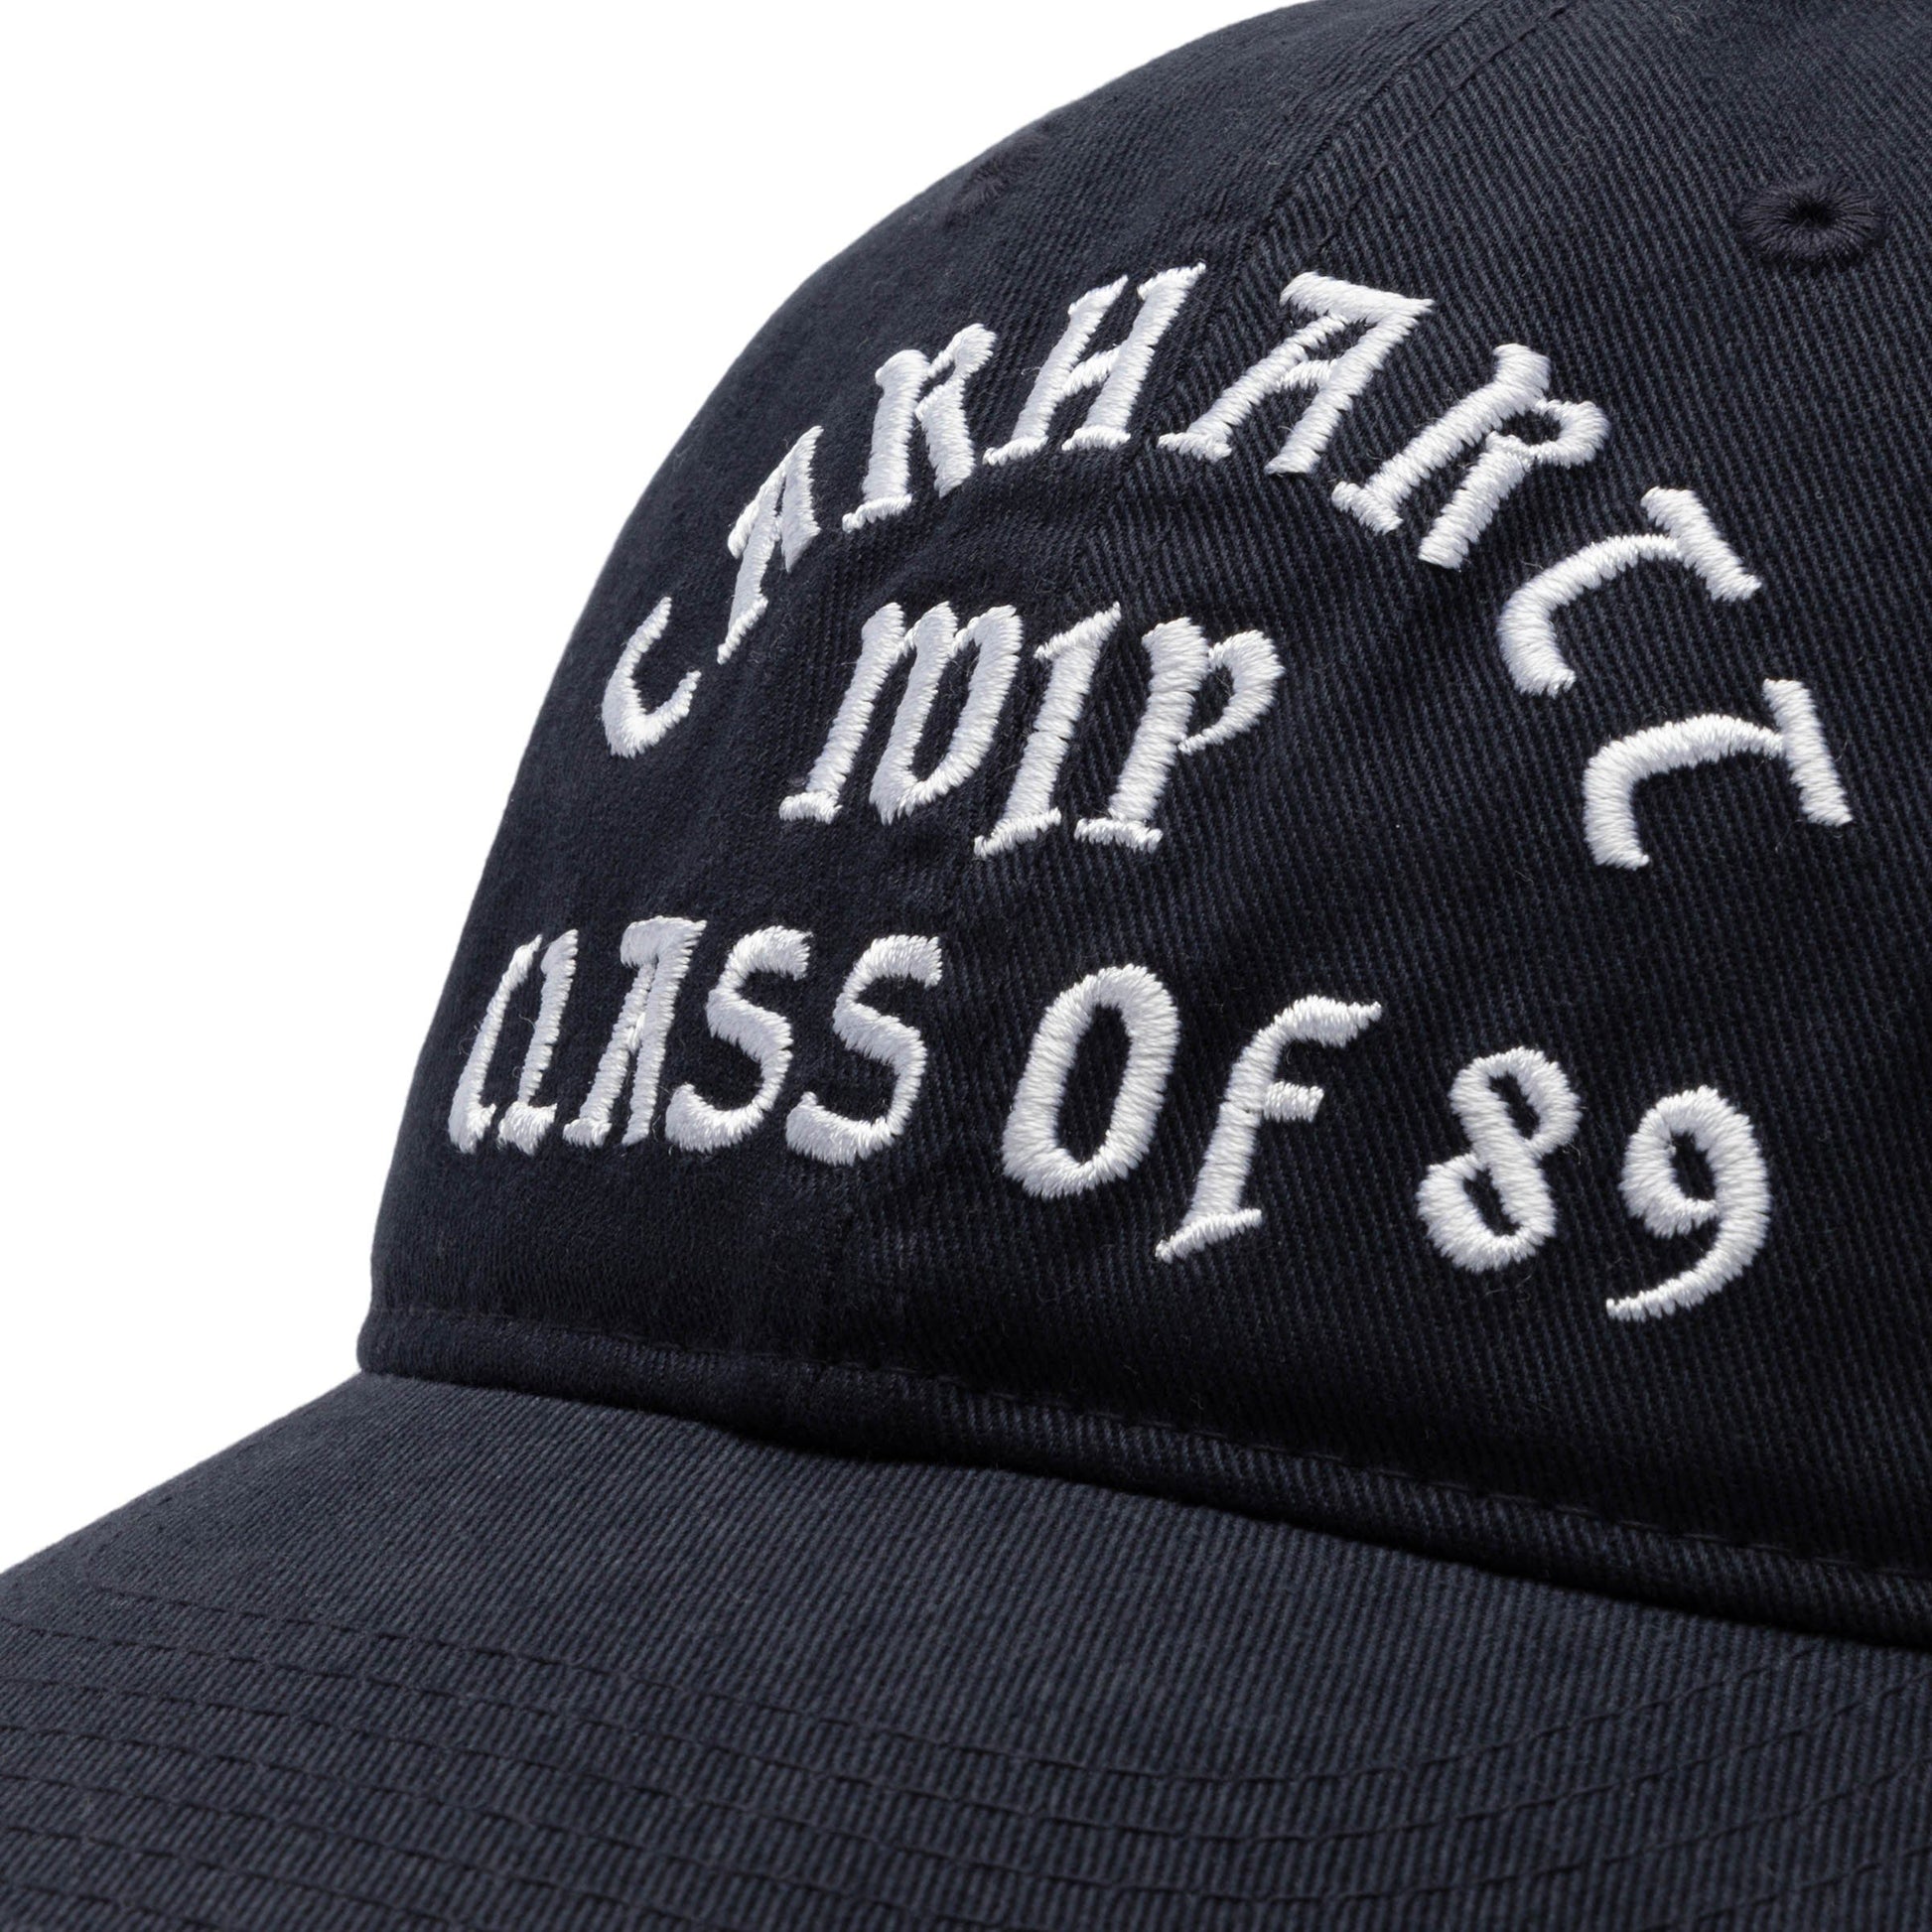 Carhartt WIP Headwear DARK NAVY/WHITE / O/S CLASS OF 89 CAP